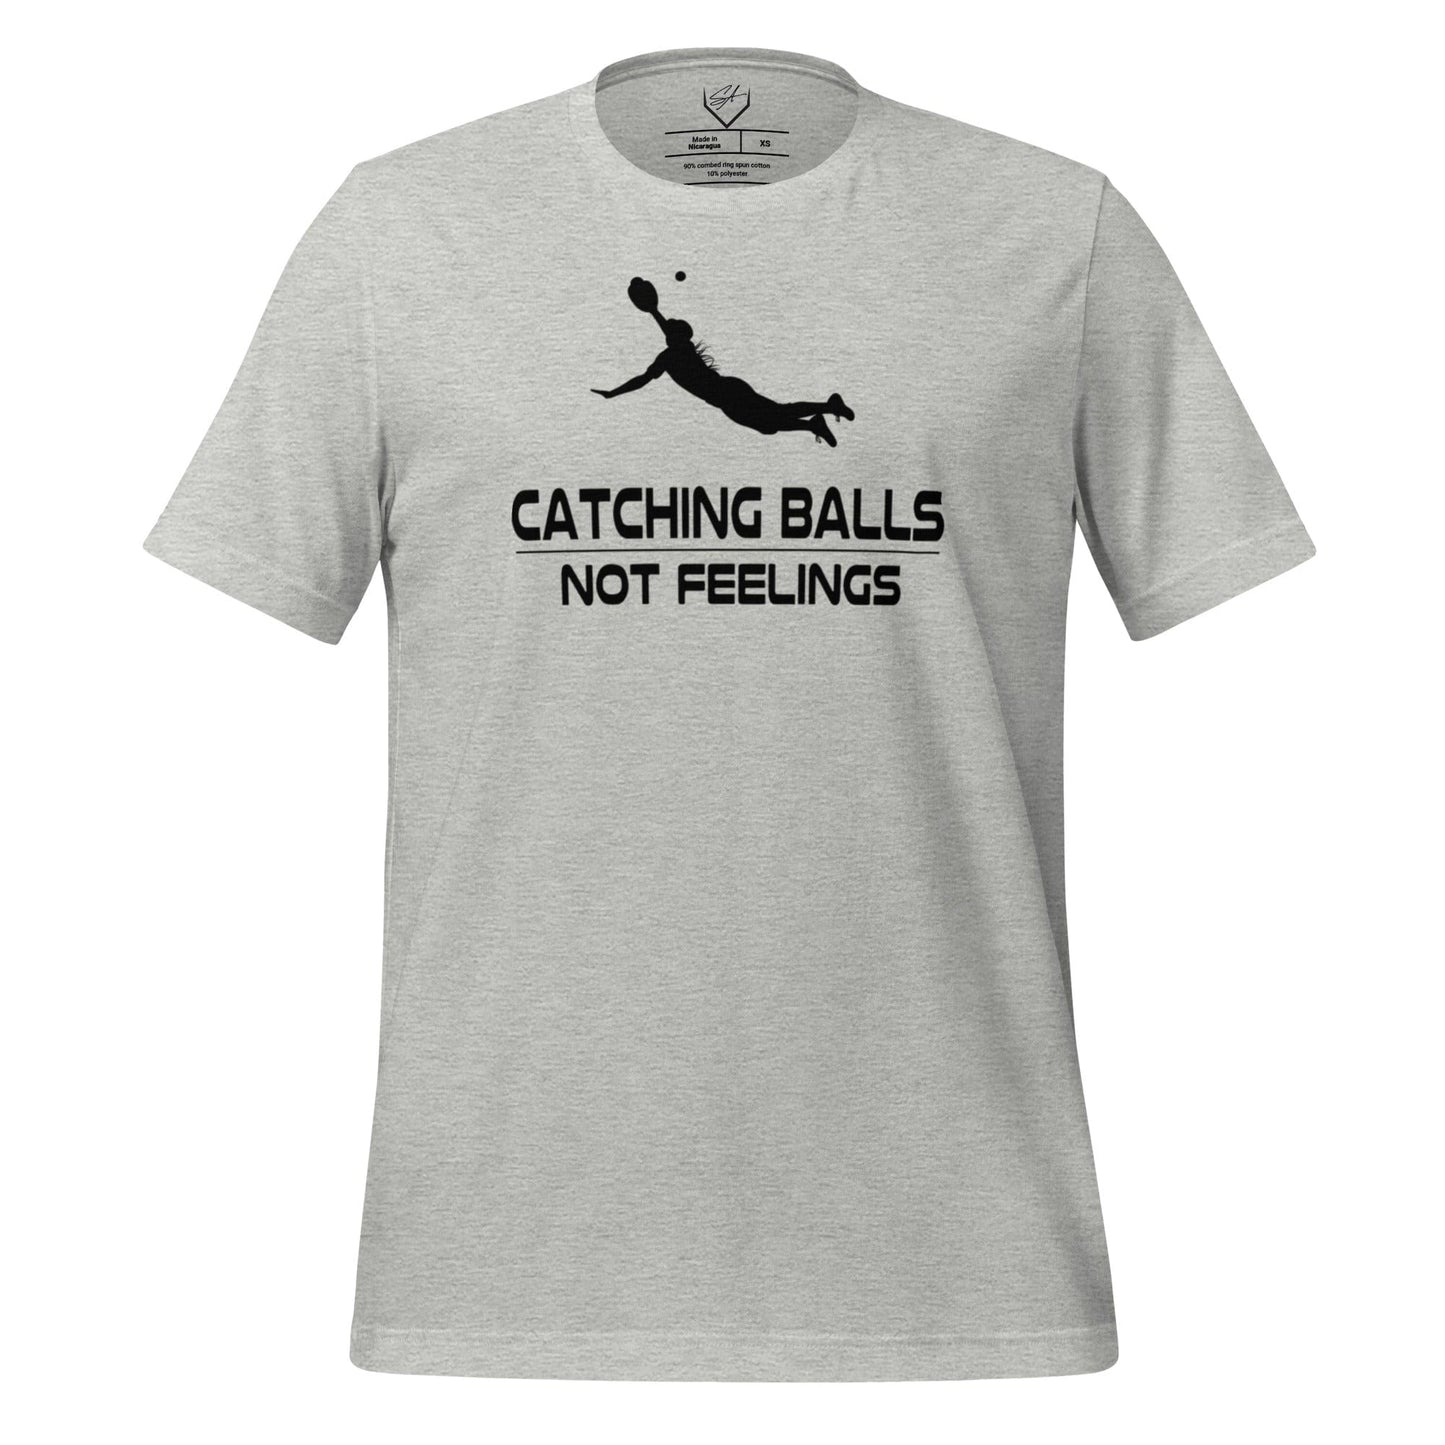 Catching Balls Not Feelings - Adult Tee